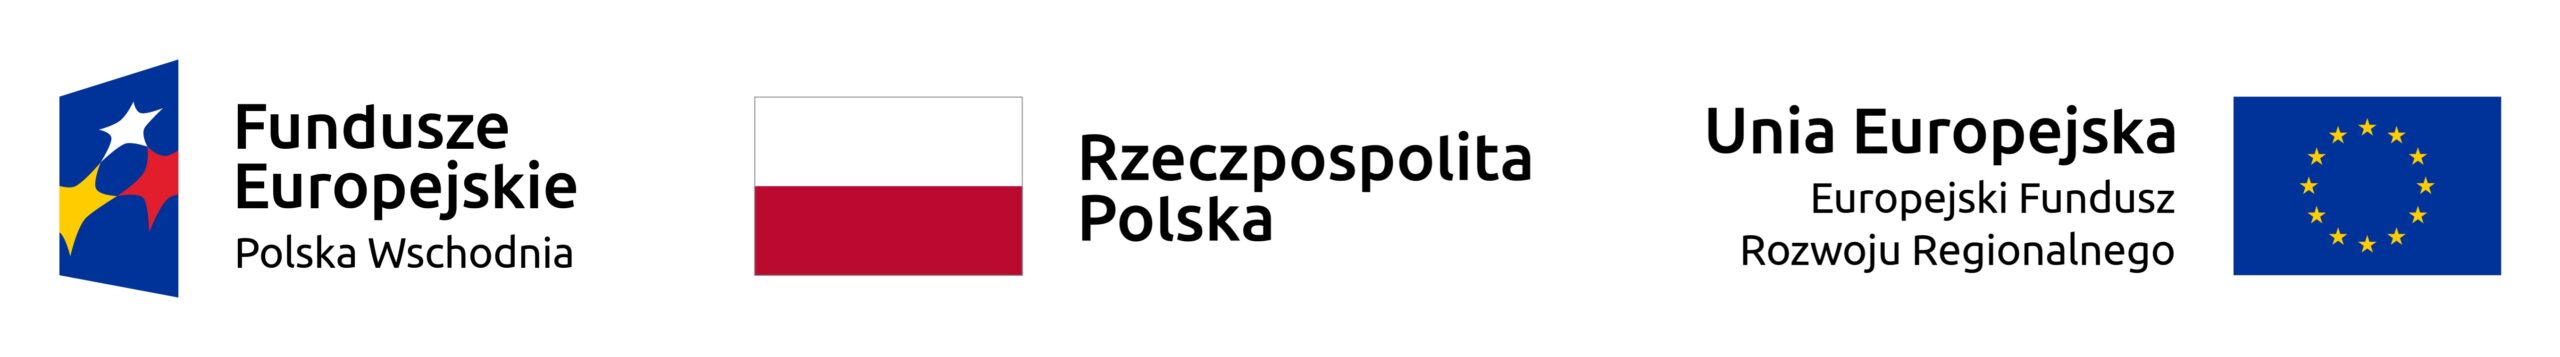 Flaga Polska Wschodnia, Flaga RP oraz flaga UE